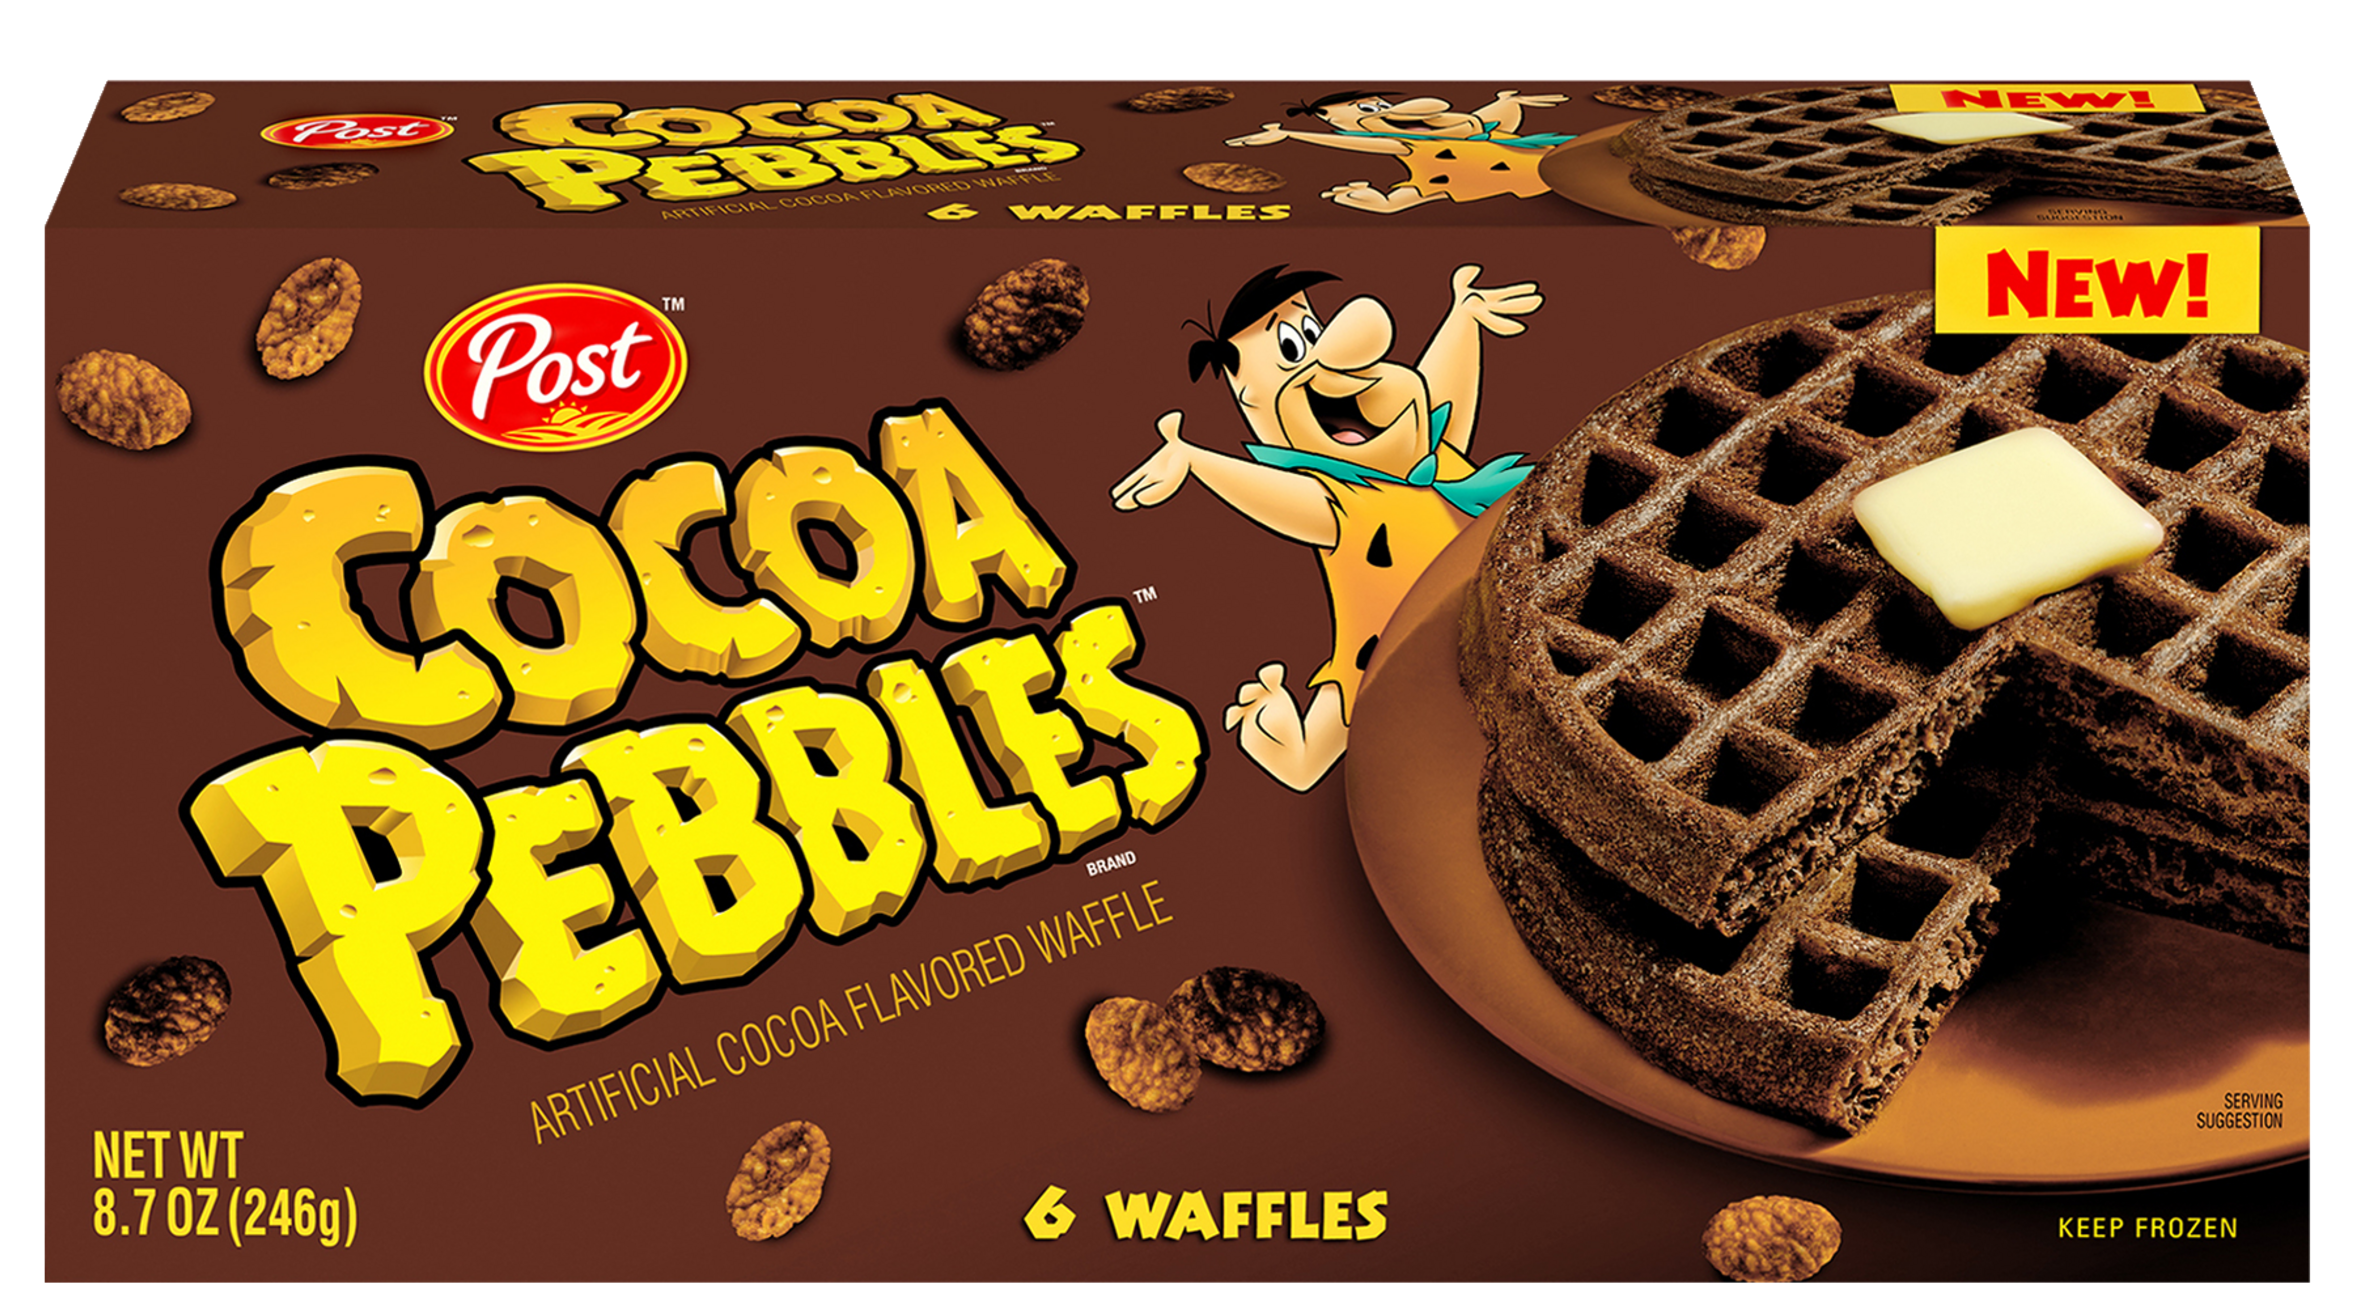 Post launches Pebbles frozen waffles